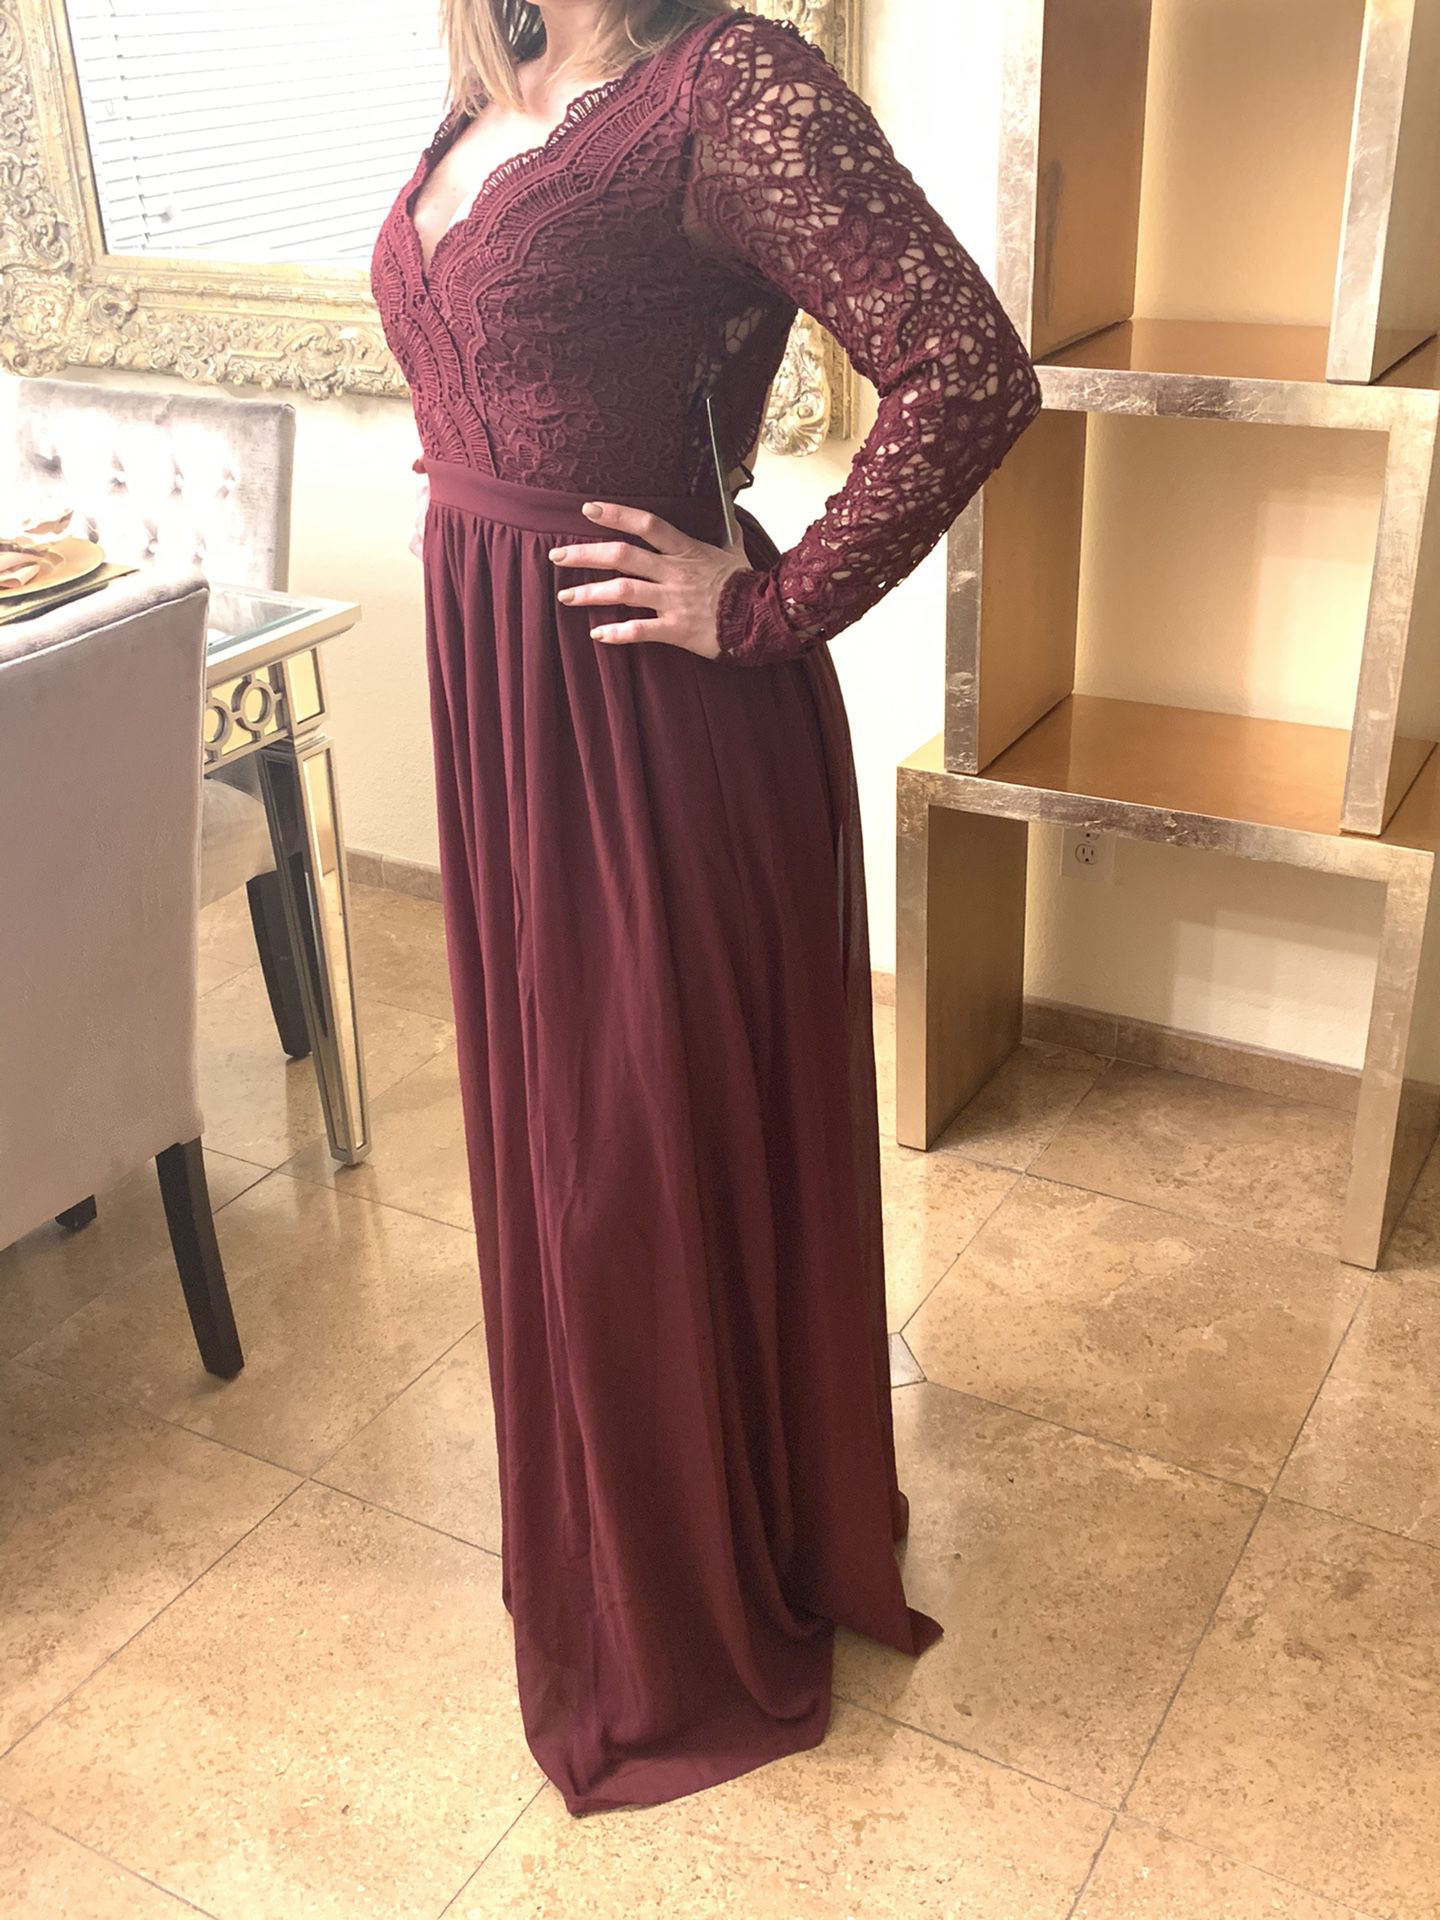 Elegant dress(perfect for prom)